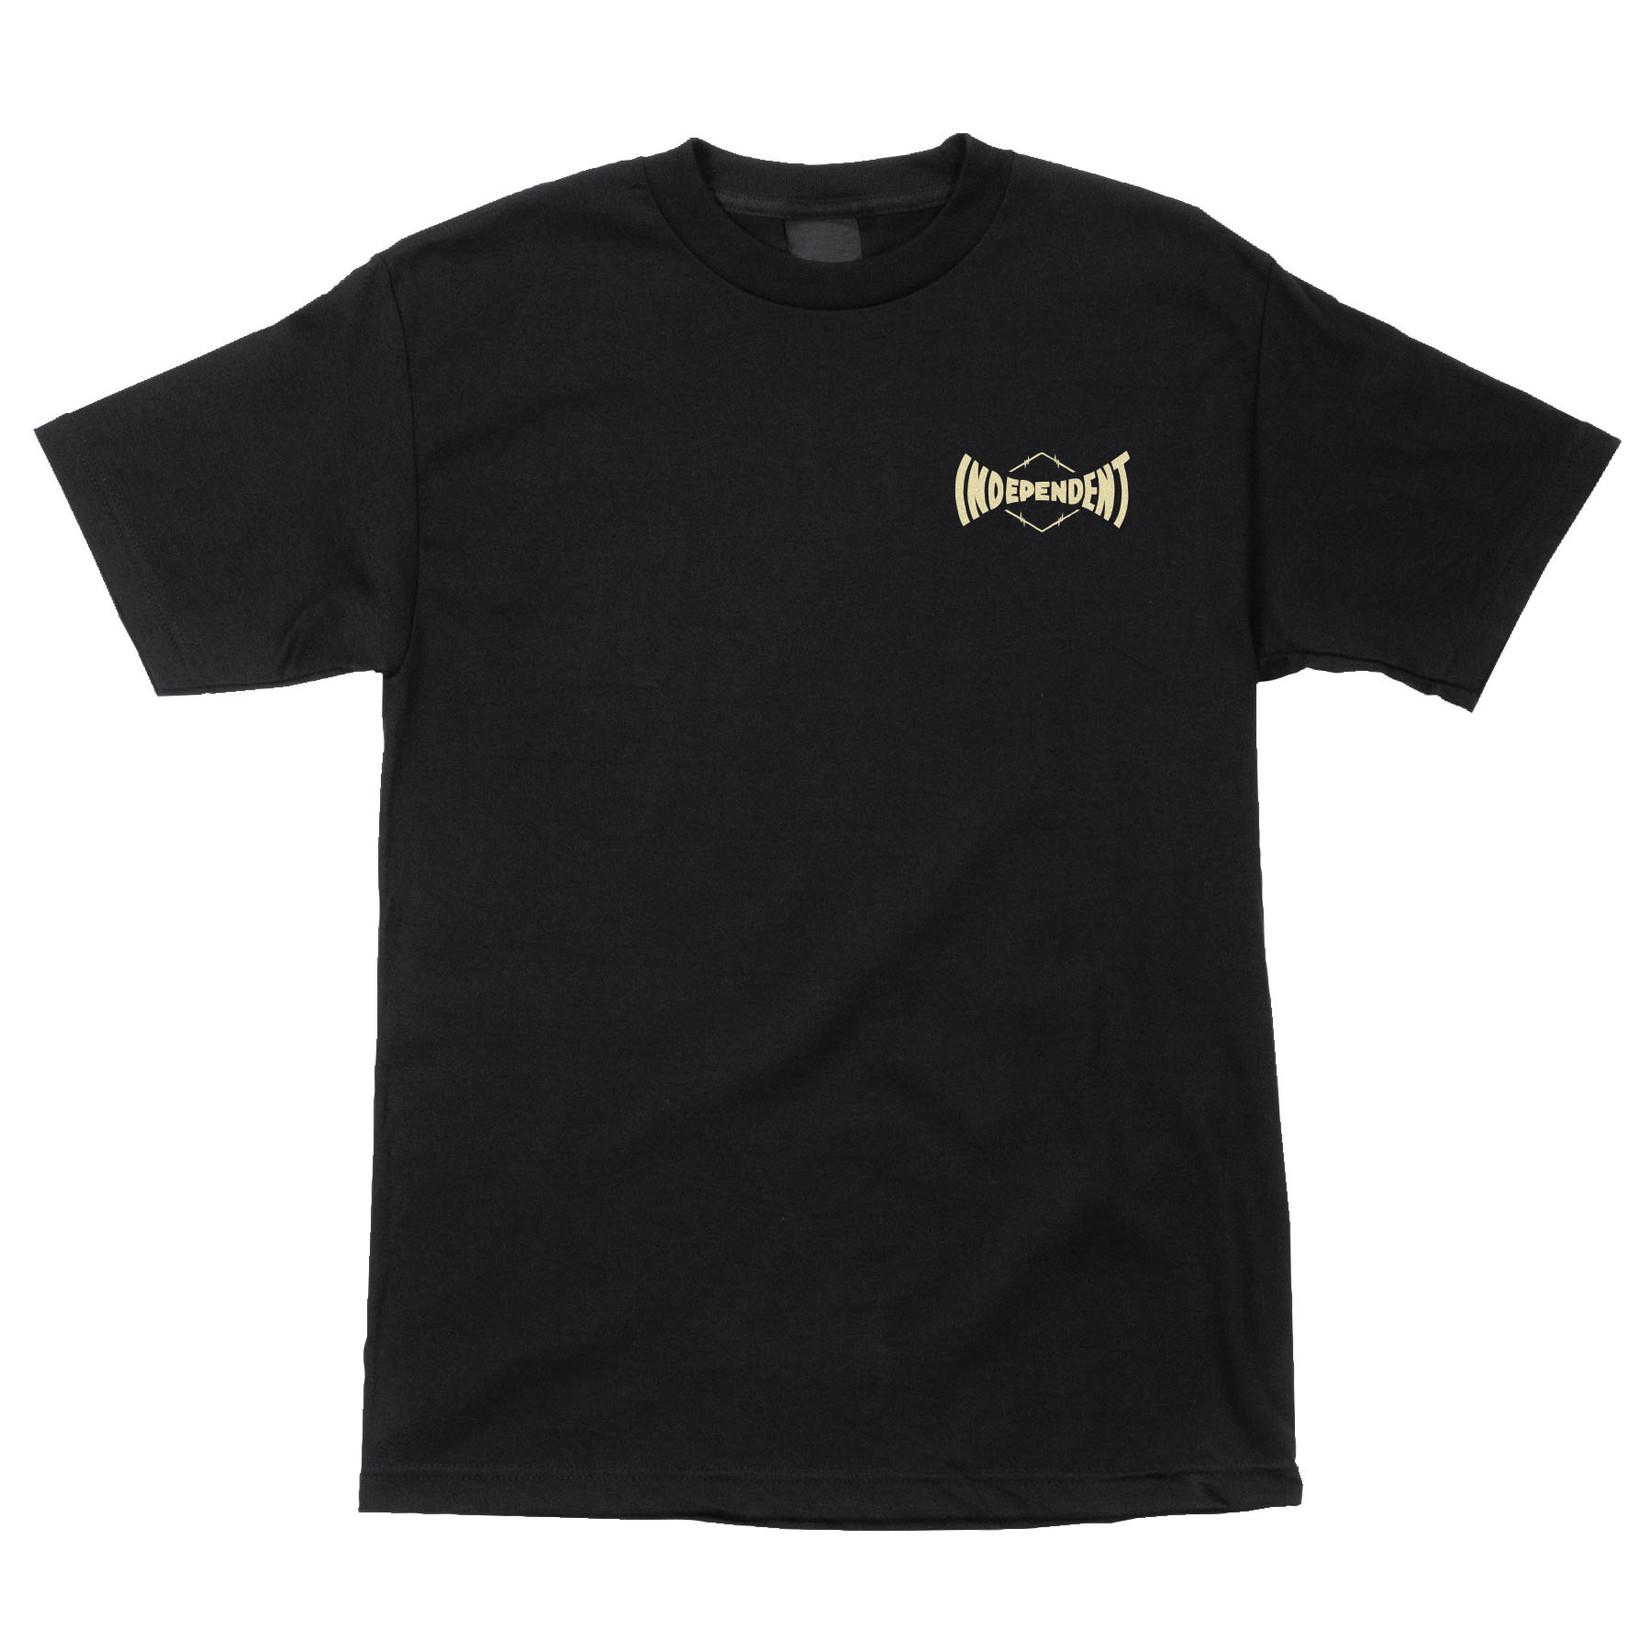 Independent Independent Junkyard T-Shirt - Black